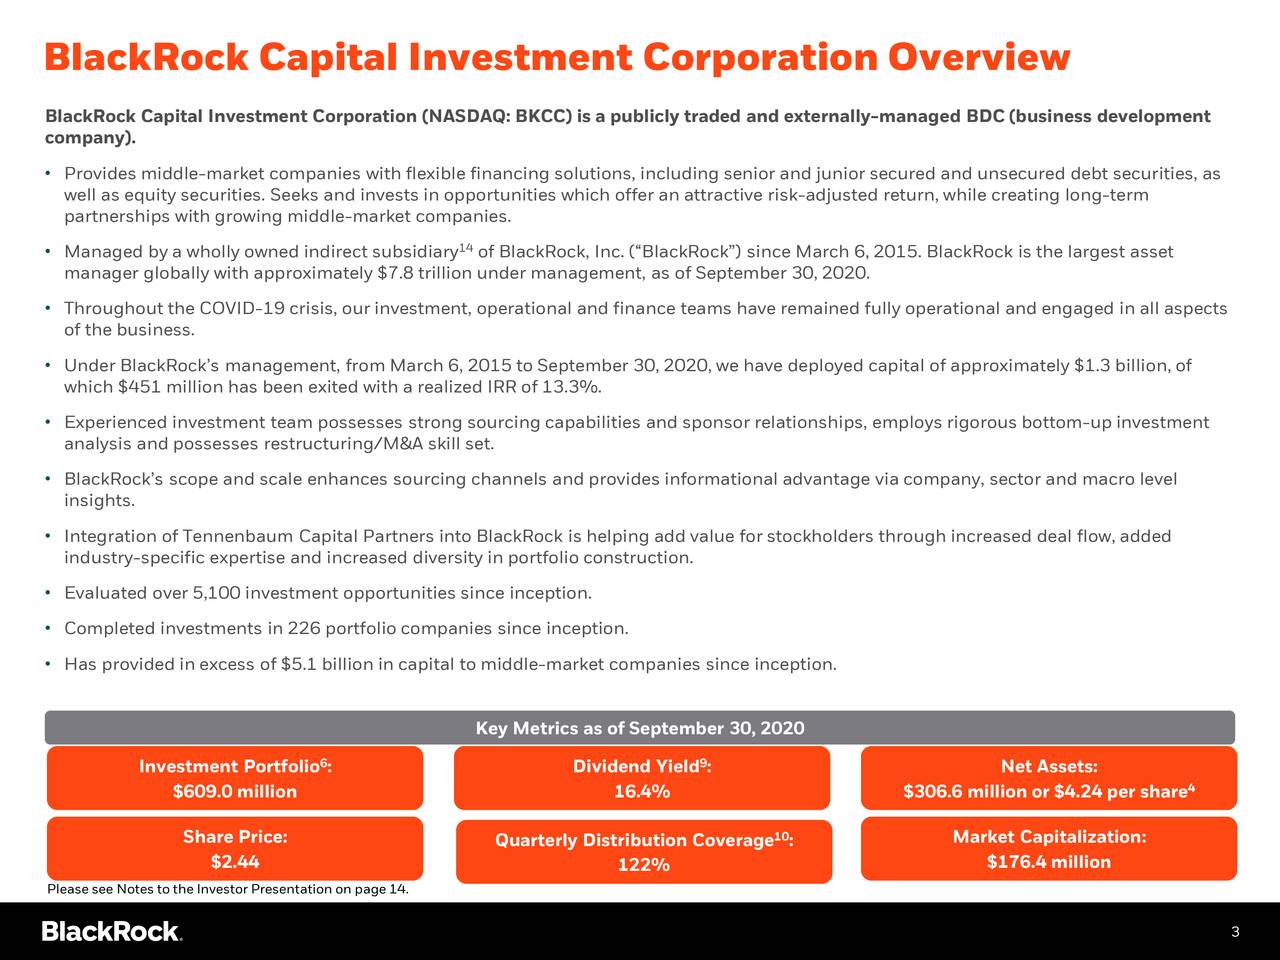 BlackRock Capital Investment Corporation 2020 Q3 Results Earnings Call Presentation (NASDAQ